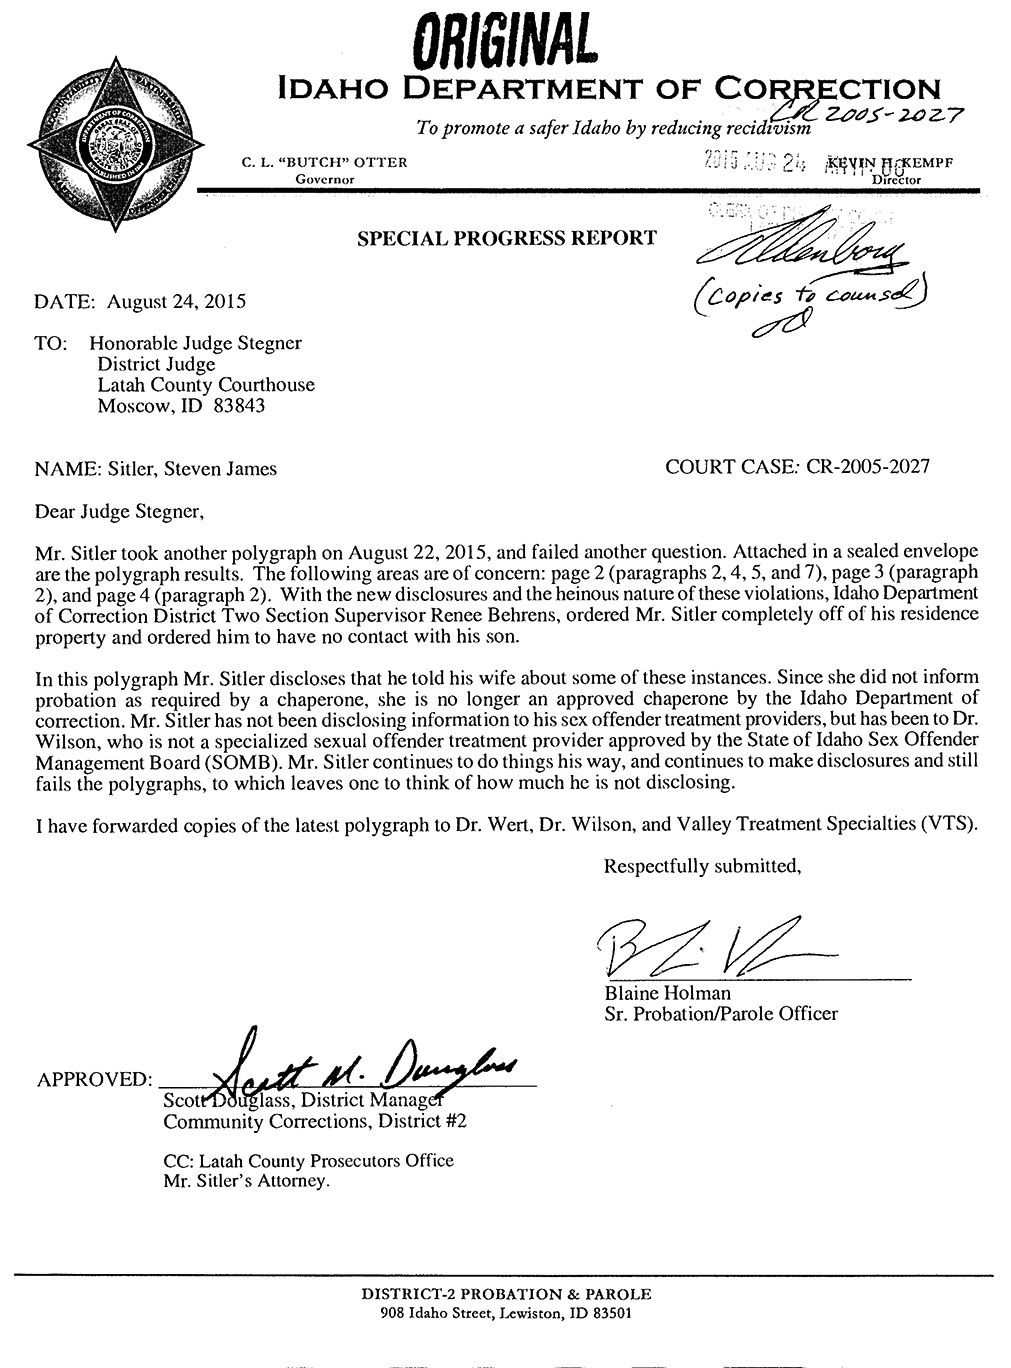 Idaho Department of Correction Special Progress Report